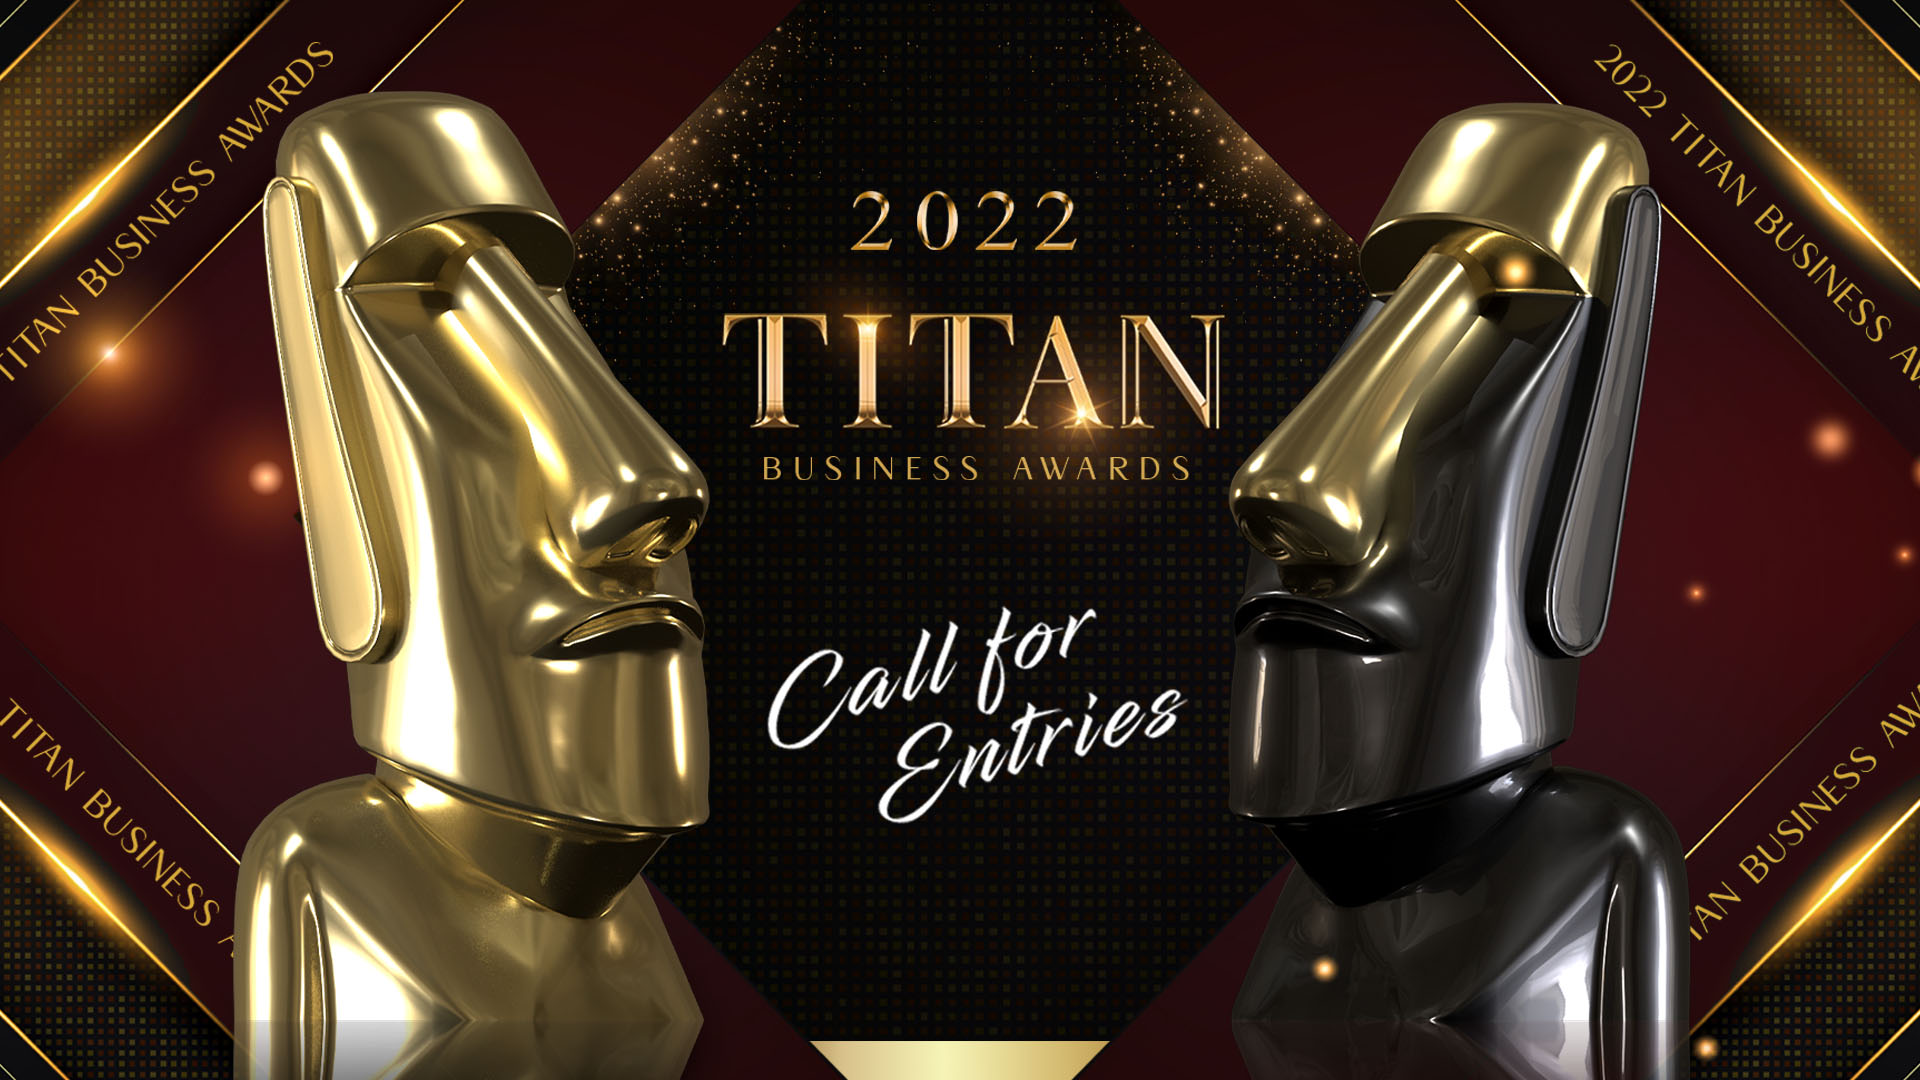 2021 TITAN Business Awards Winners Announced